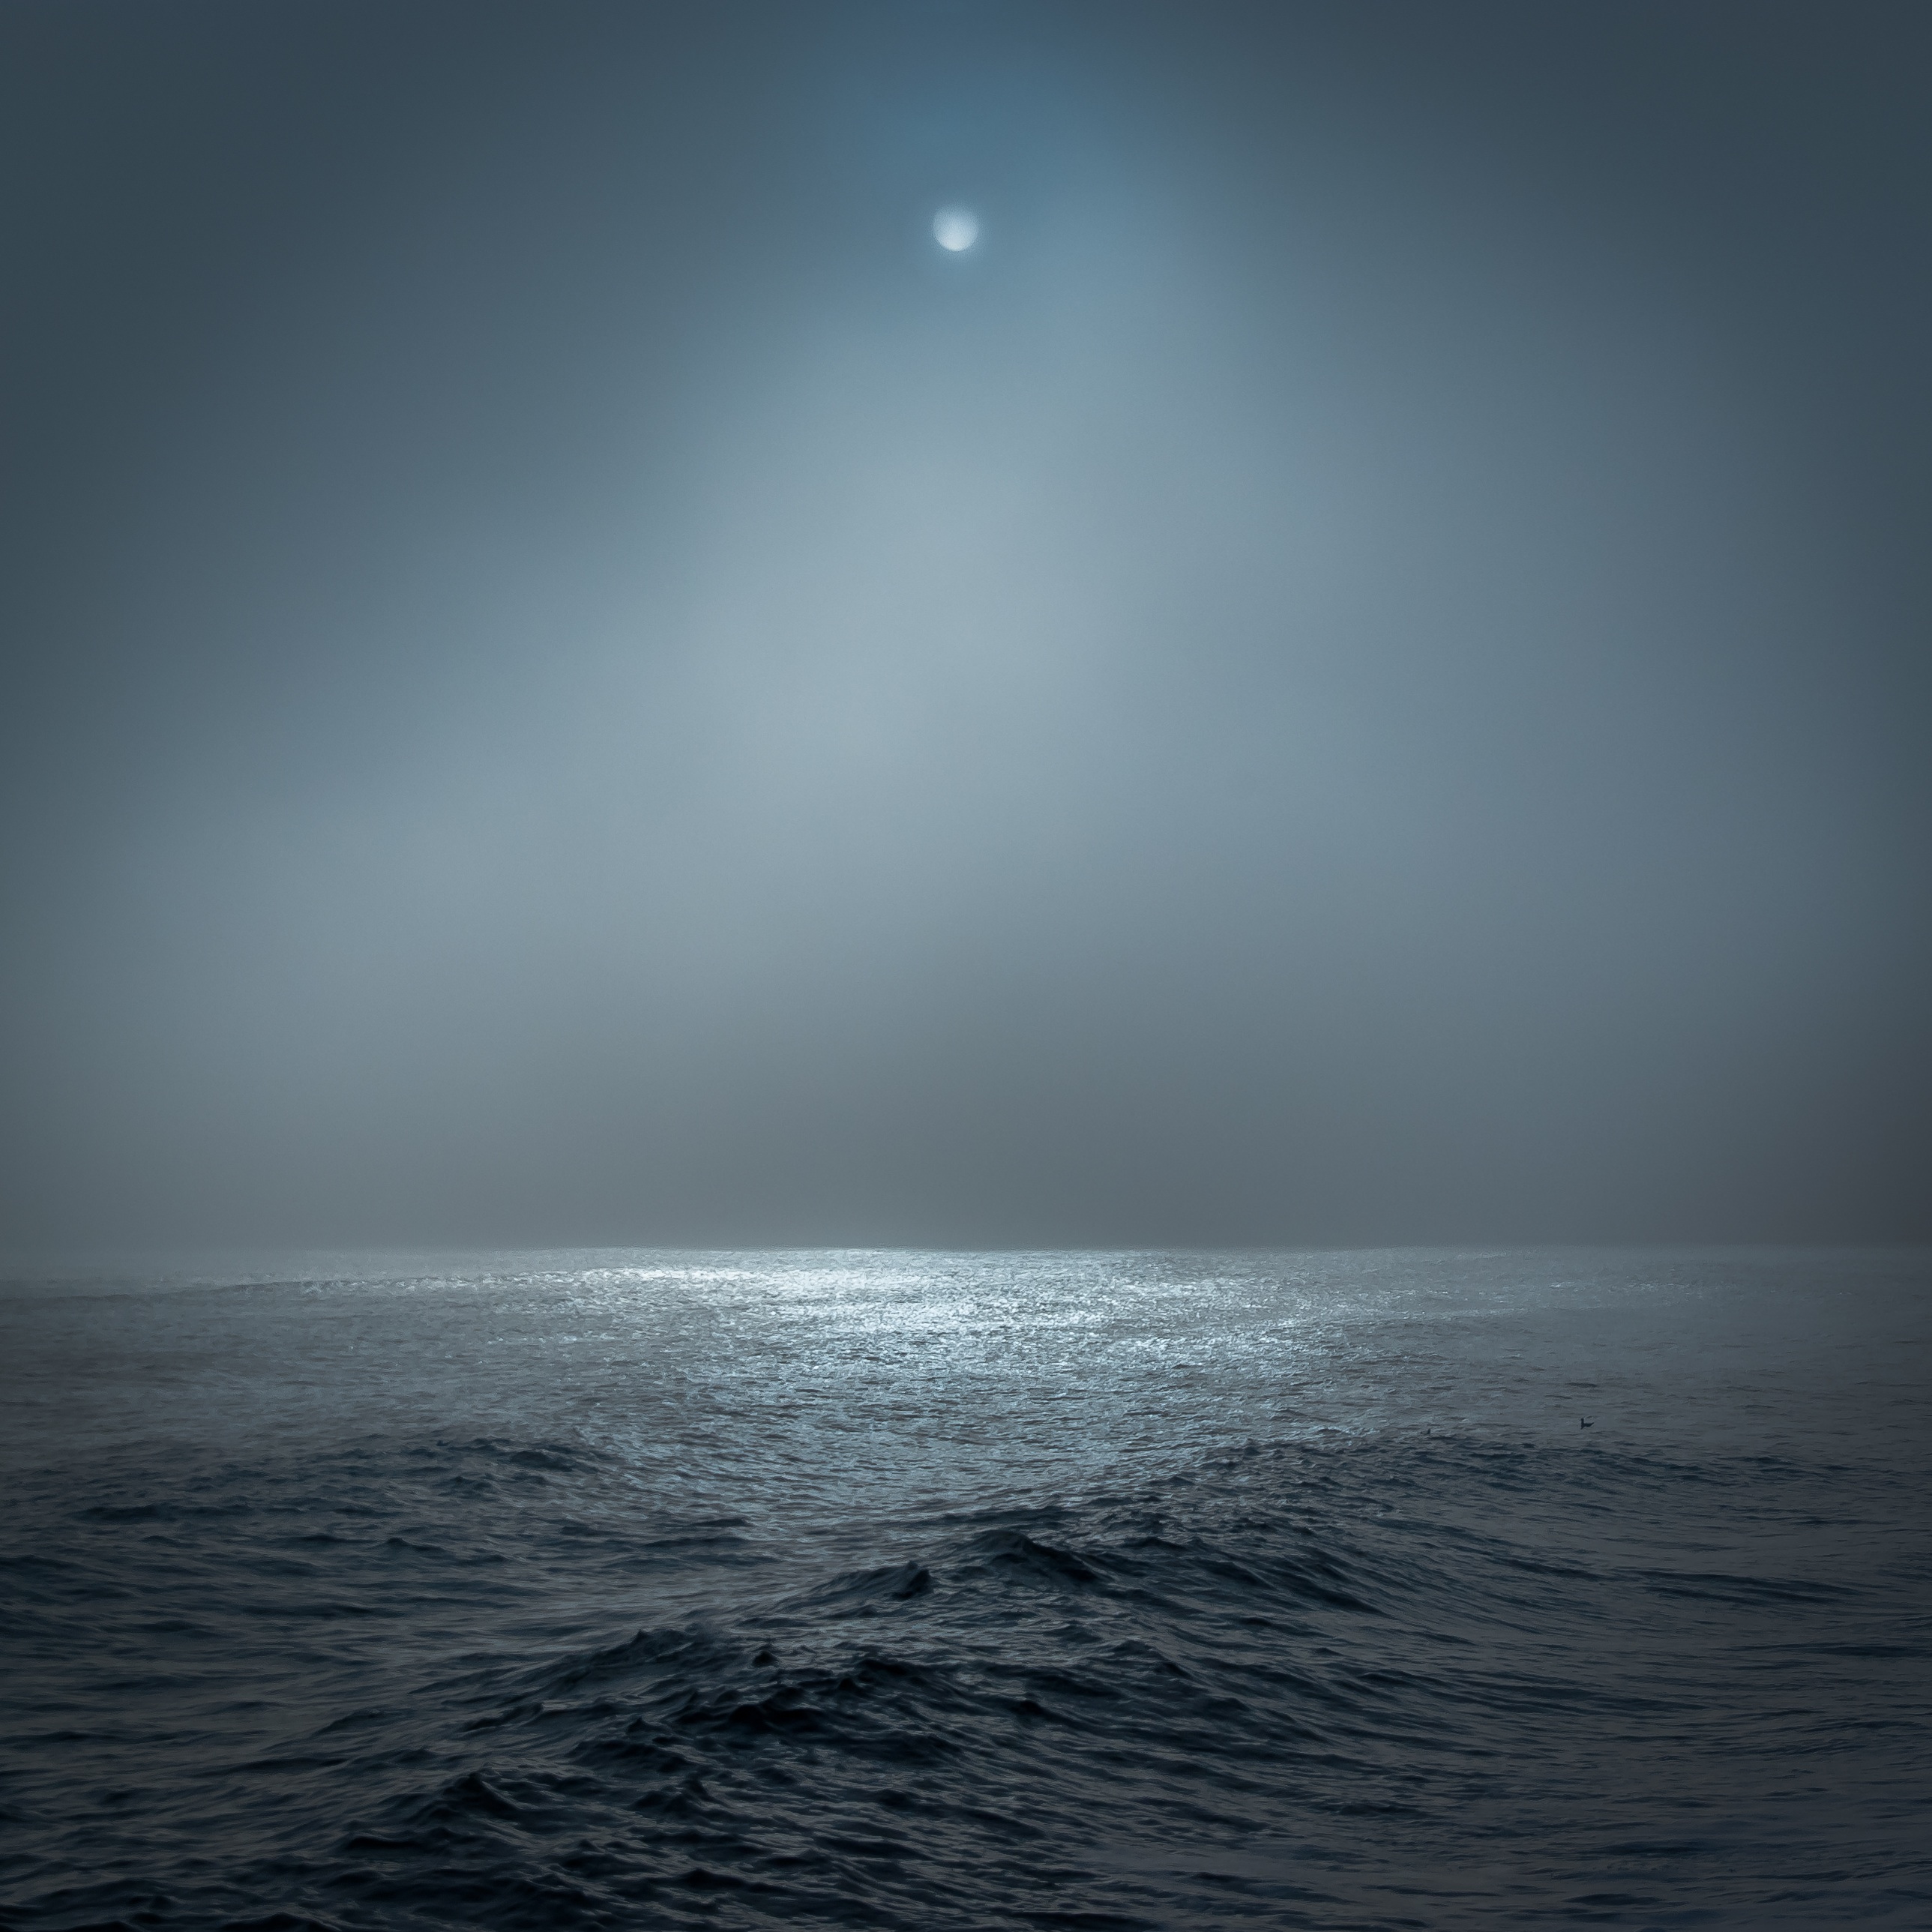 Wallpapers ocean moonlight landscapes on the desktop